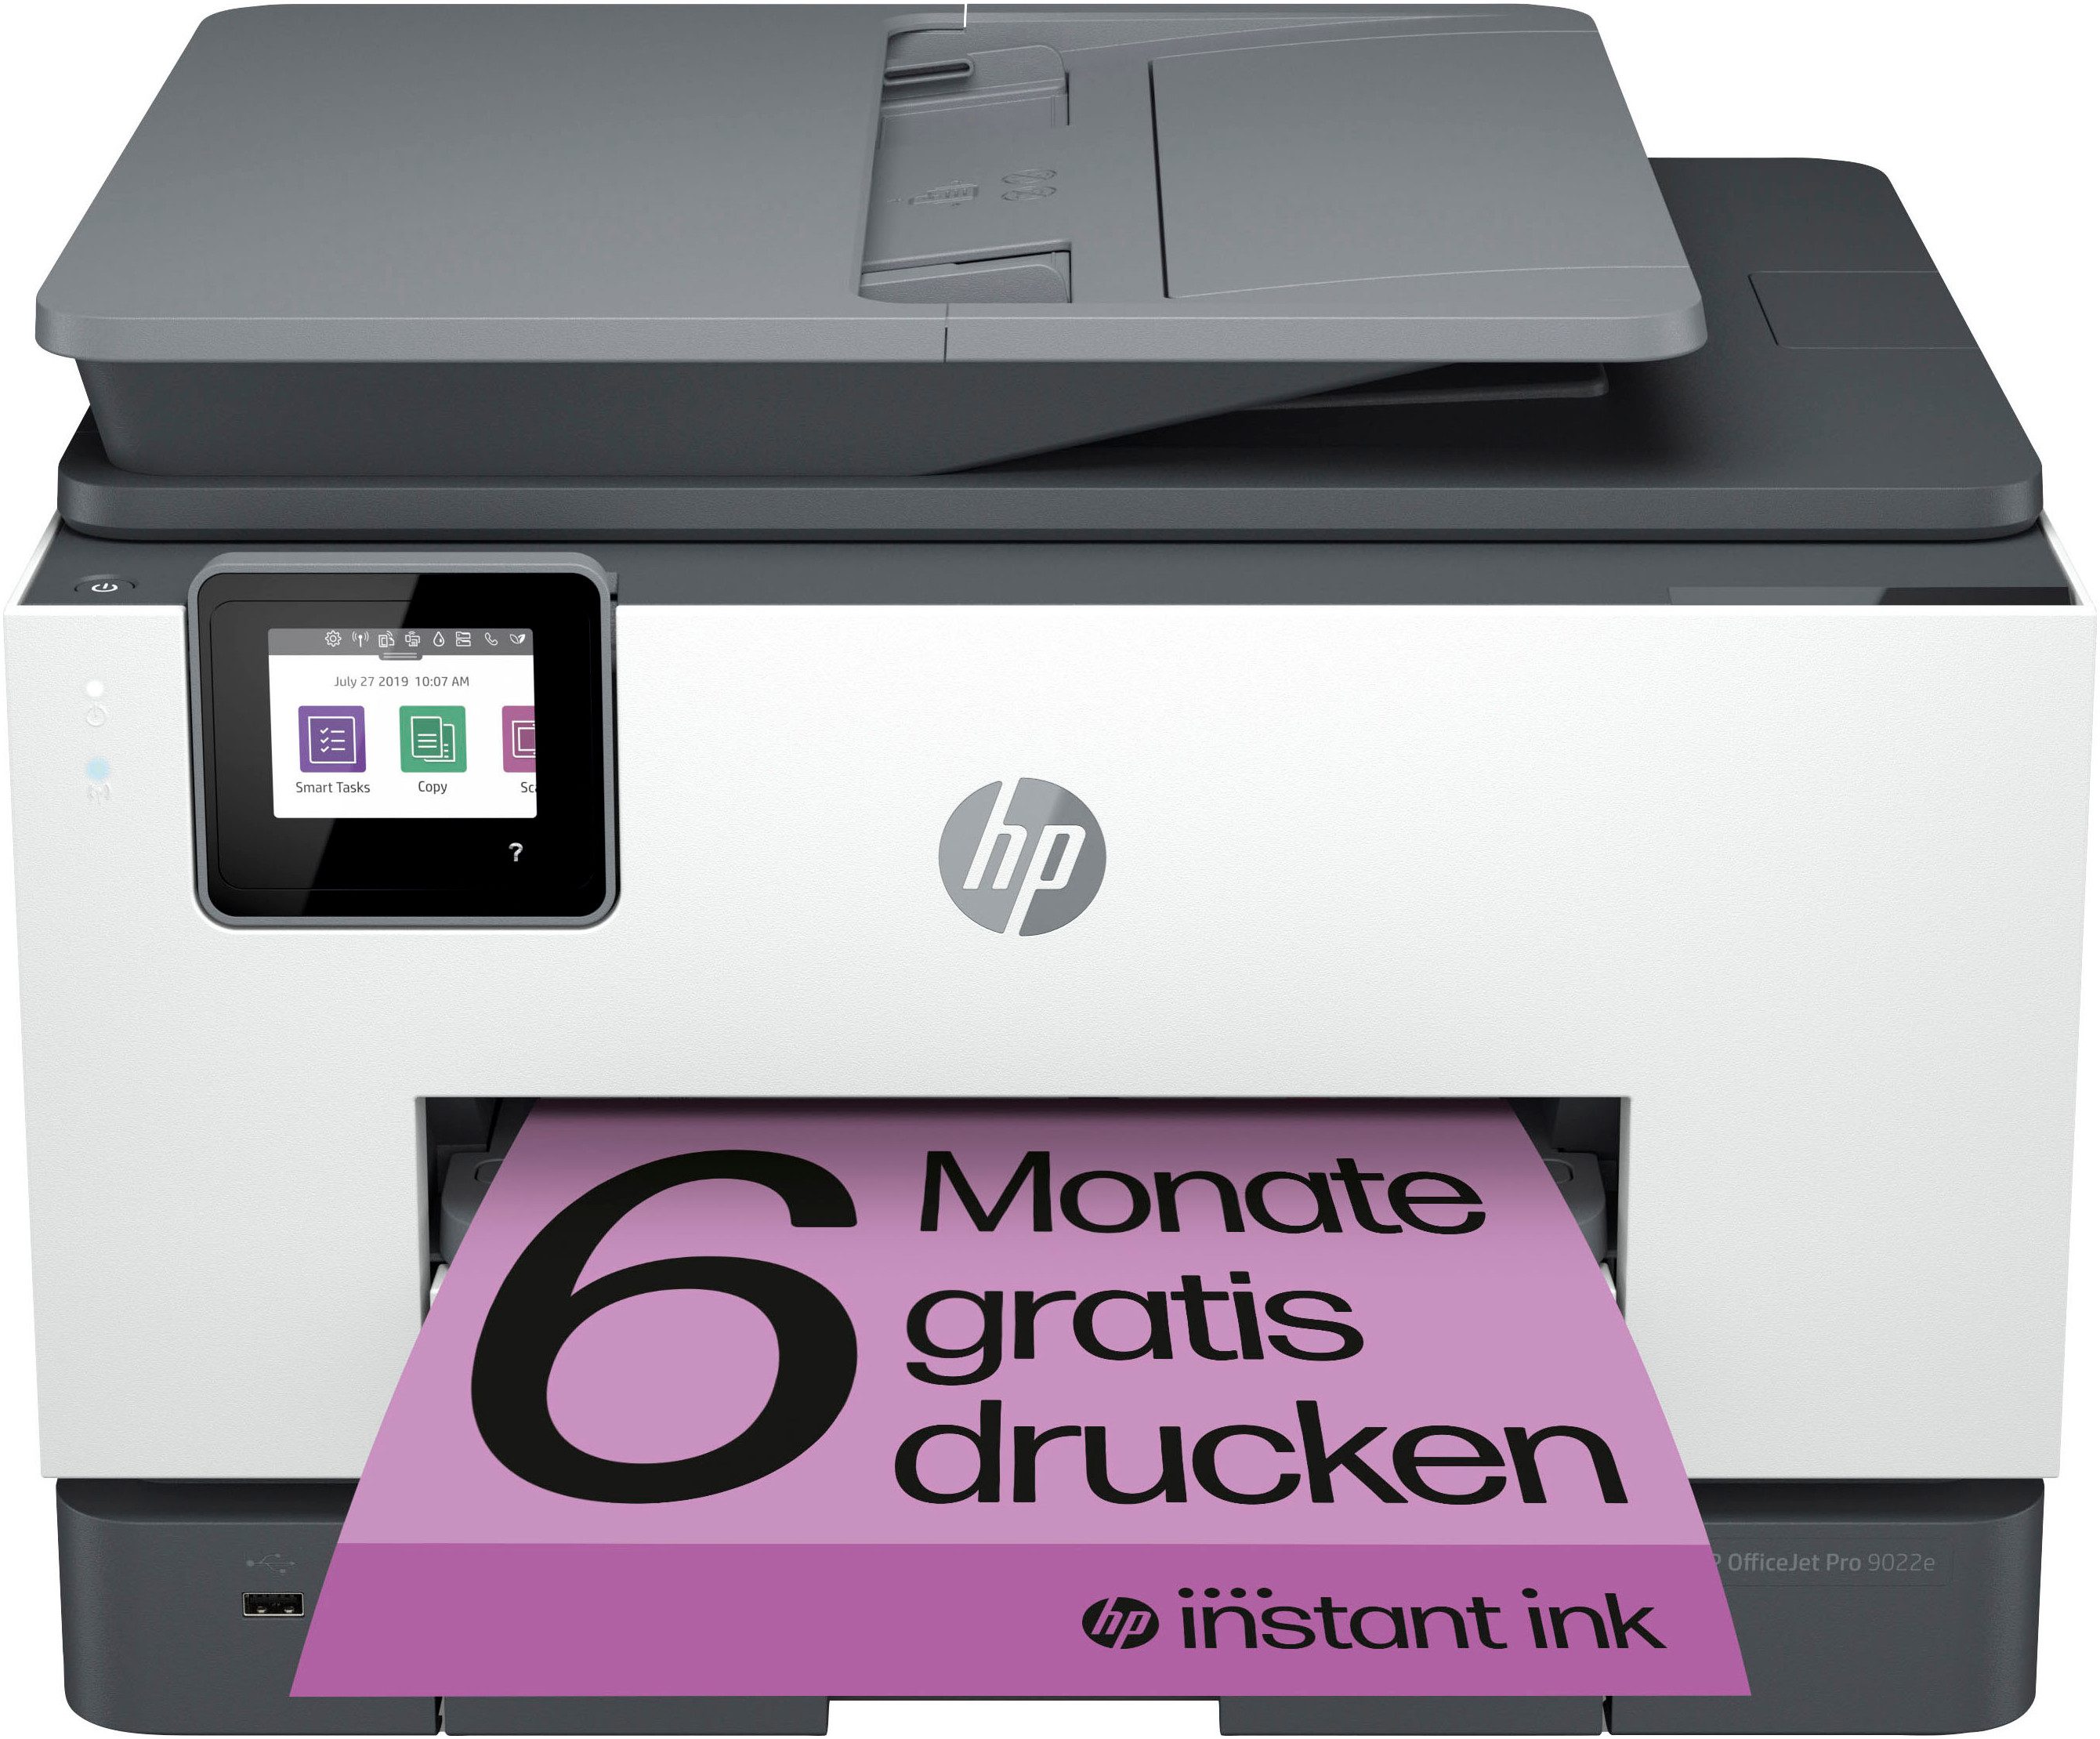 HP OfficeJet Pro 9022e Многофункциональный принтер, (LAN (Ethernet), WLAN (Wi-Fi), 6 Monate gratis Drucken mit HP Instant Ink inklusive)